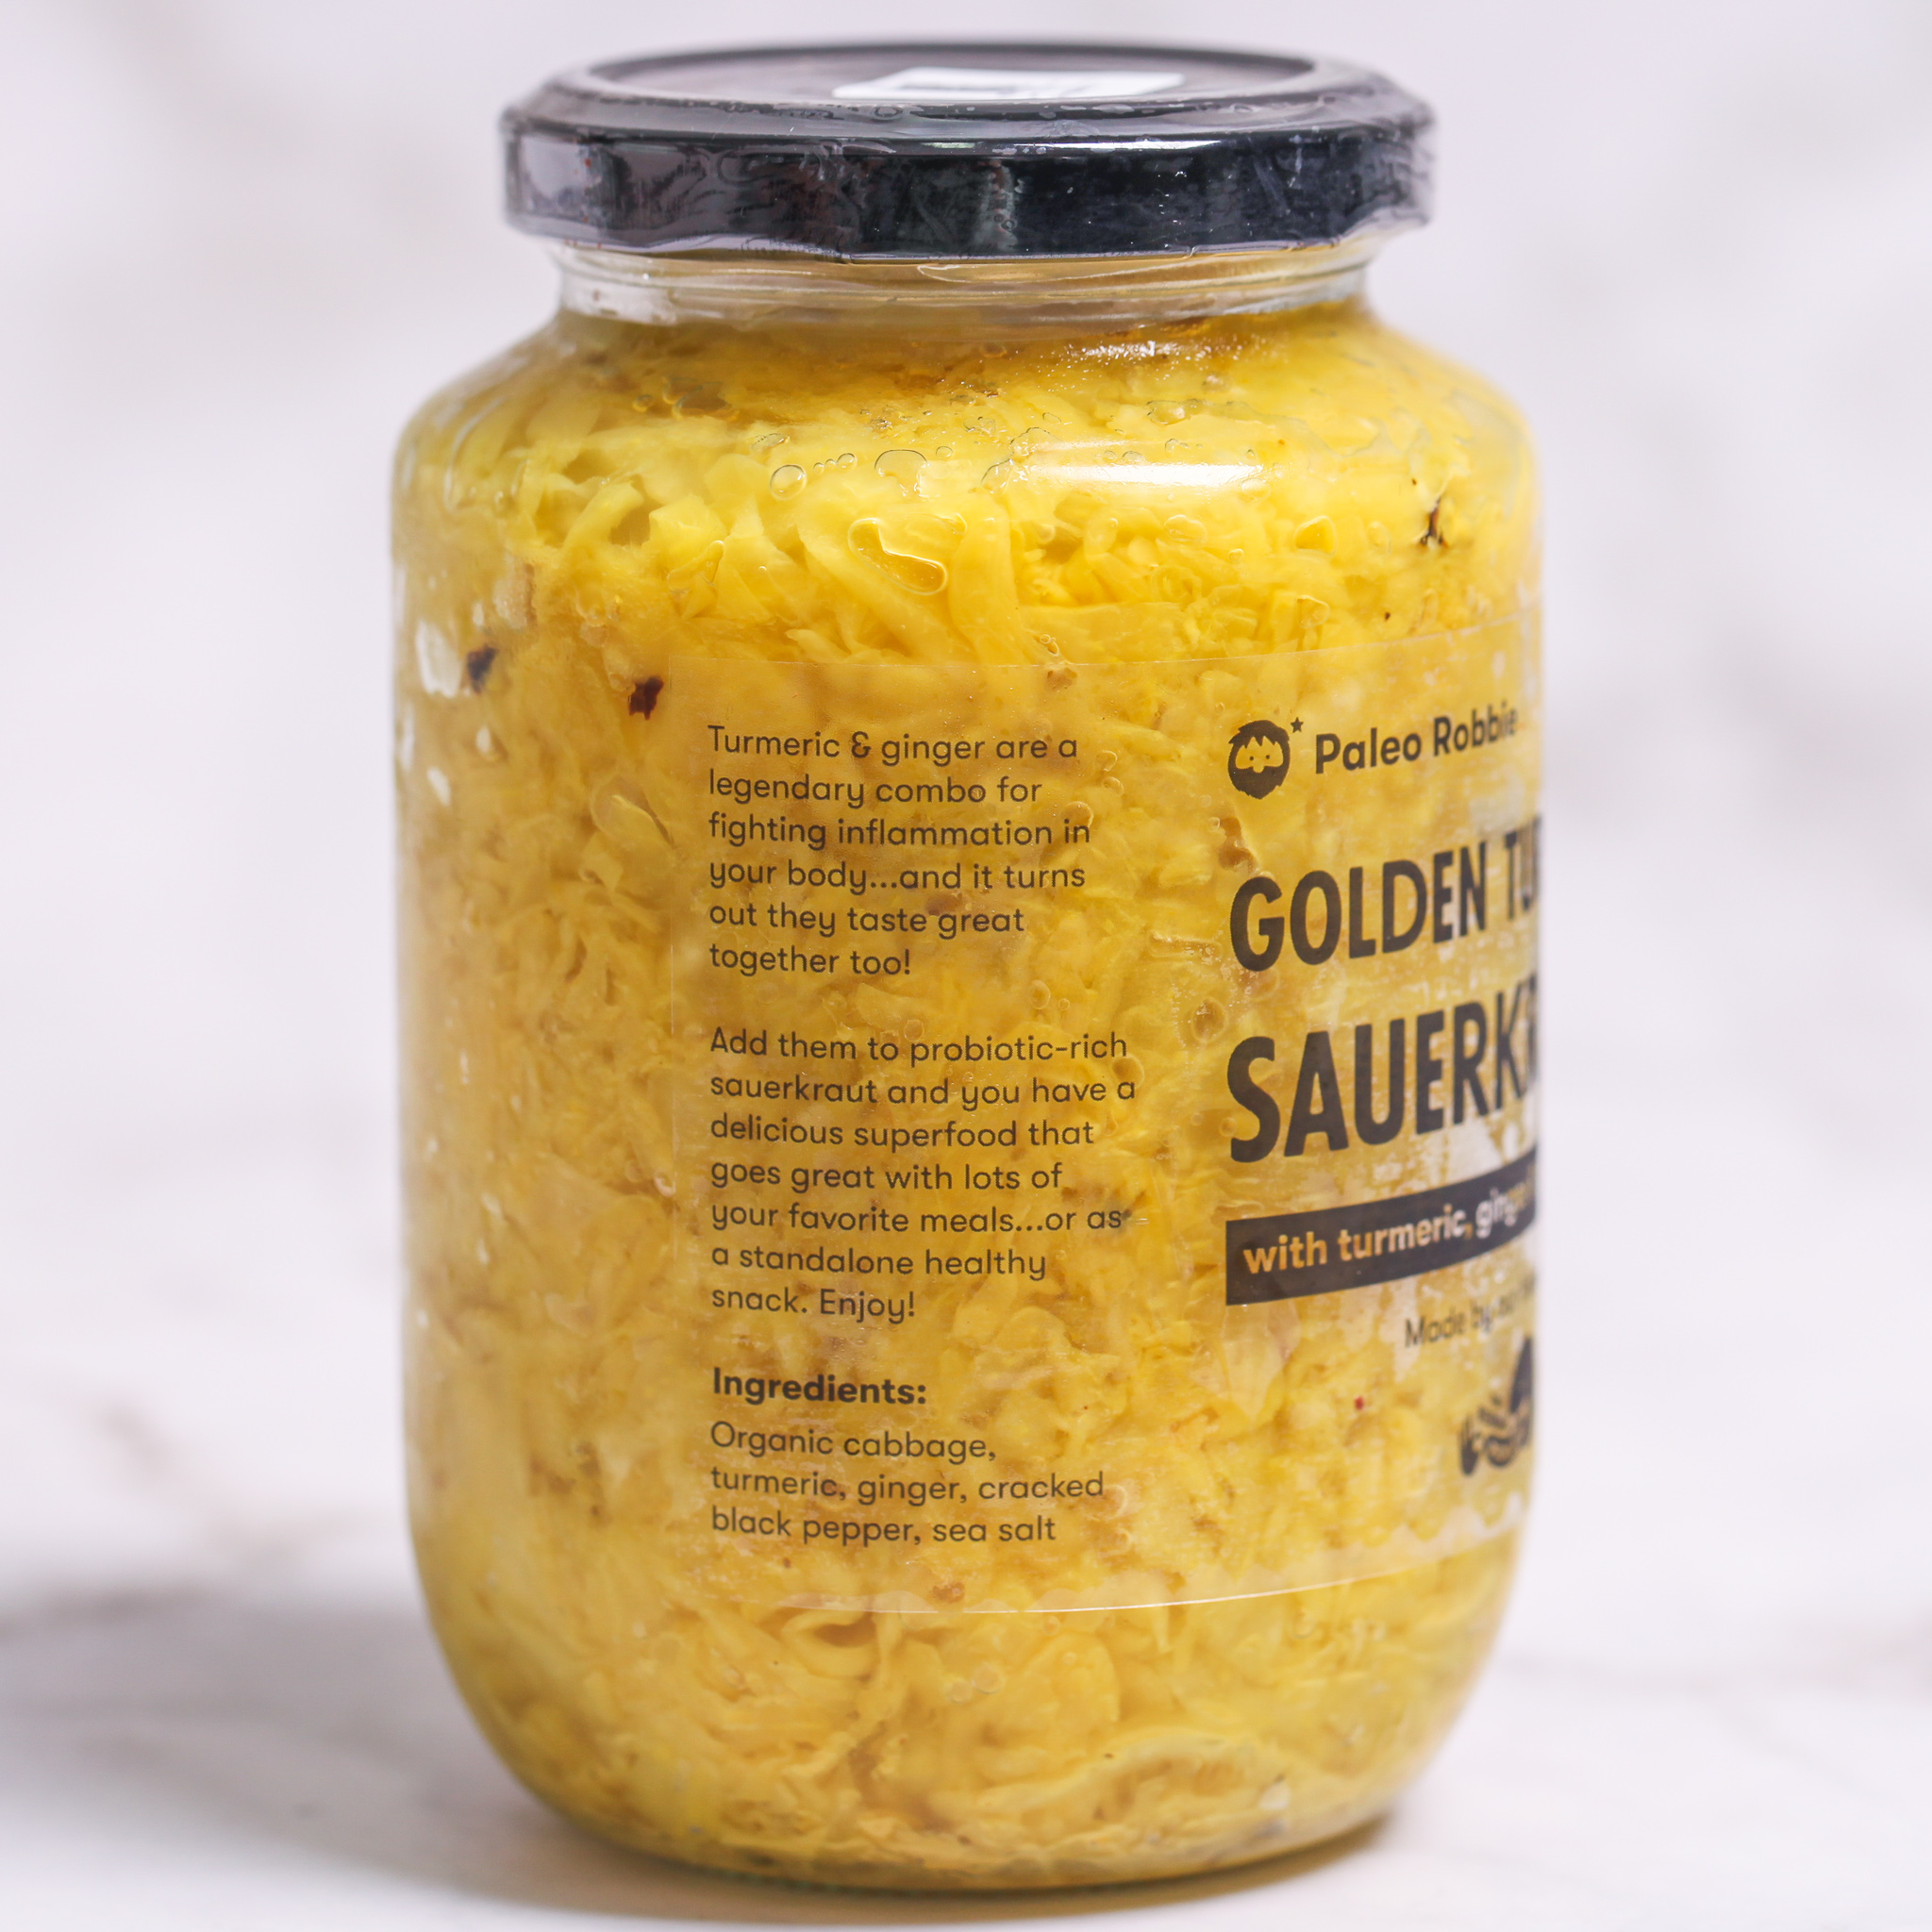 Golden Sauerkraut with Turmeric & Ginger